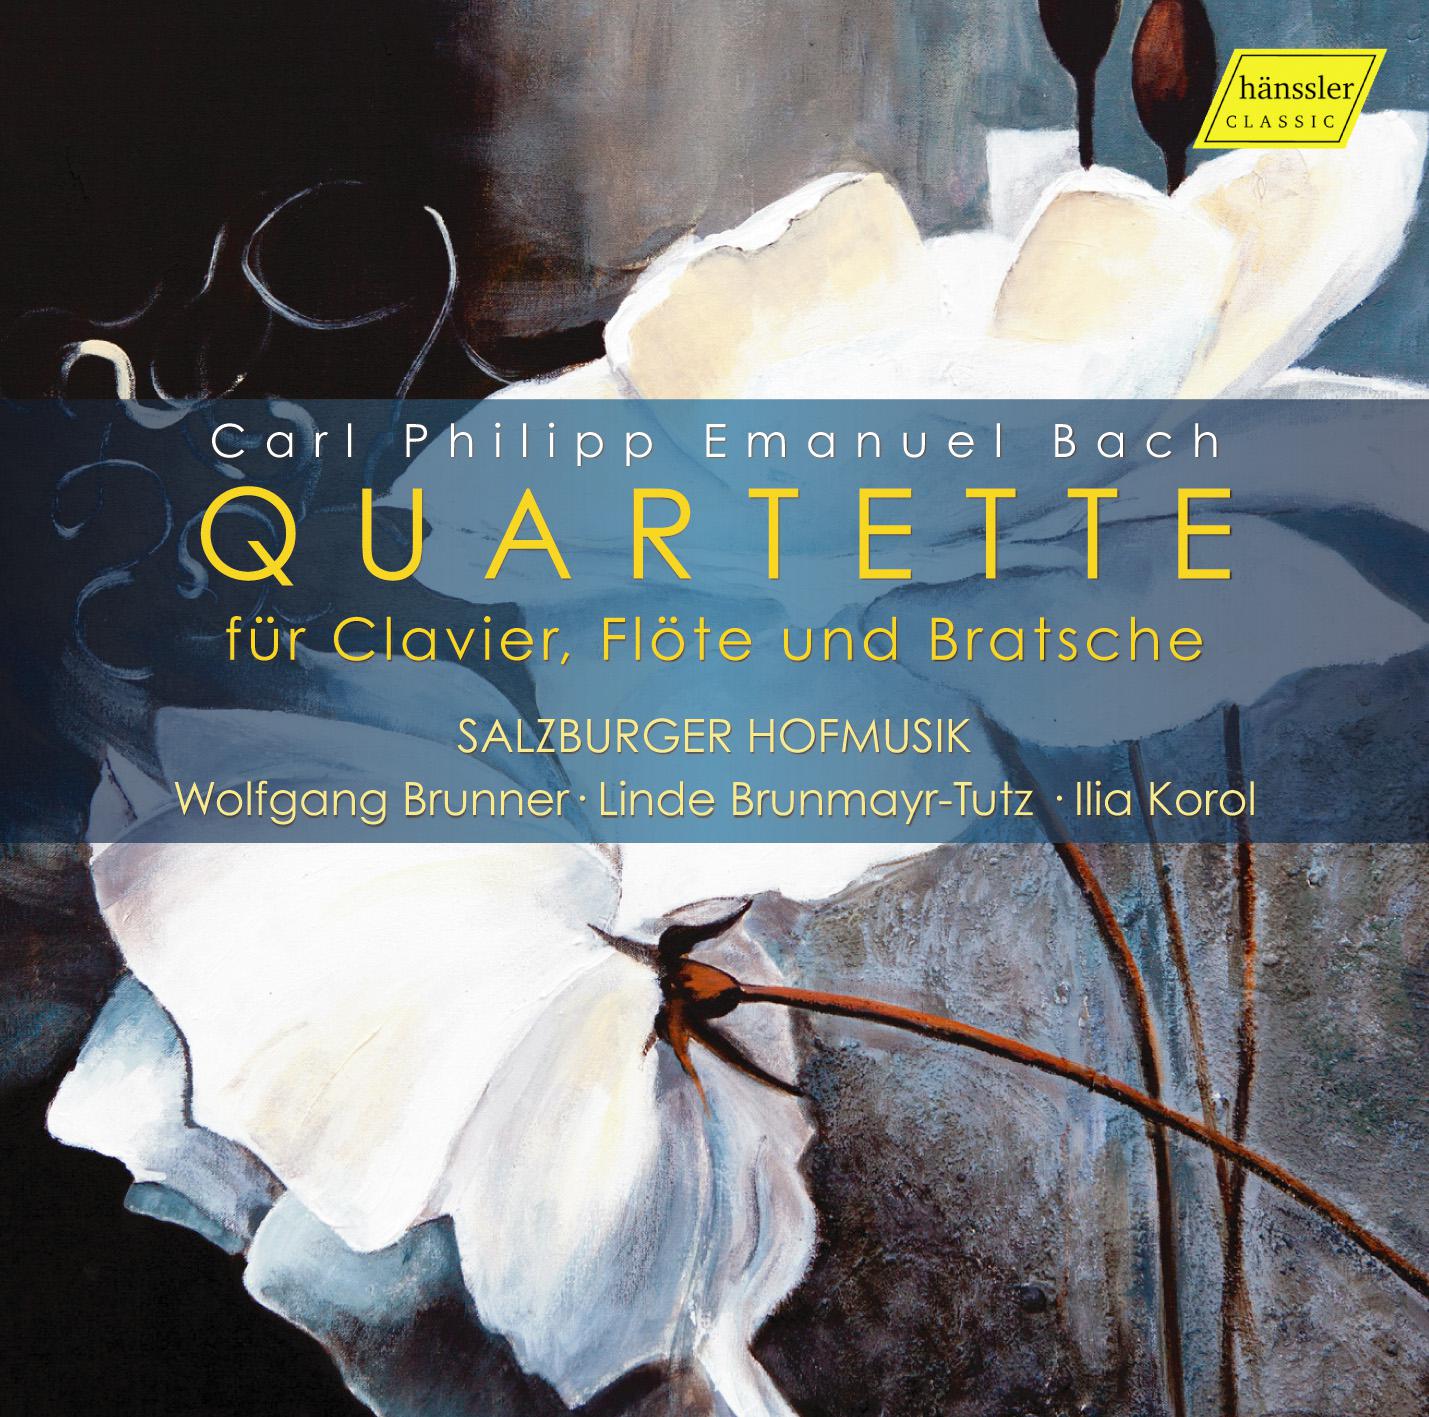 Quartette for Keyboard, Flute & Viola in G Major, Wq. 95: I. Allegretto